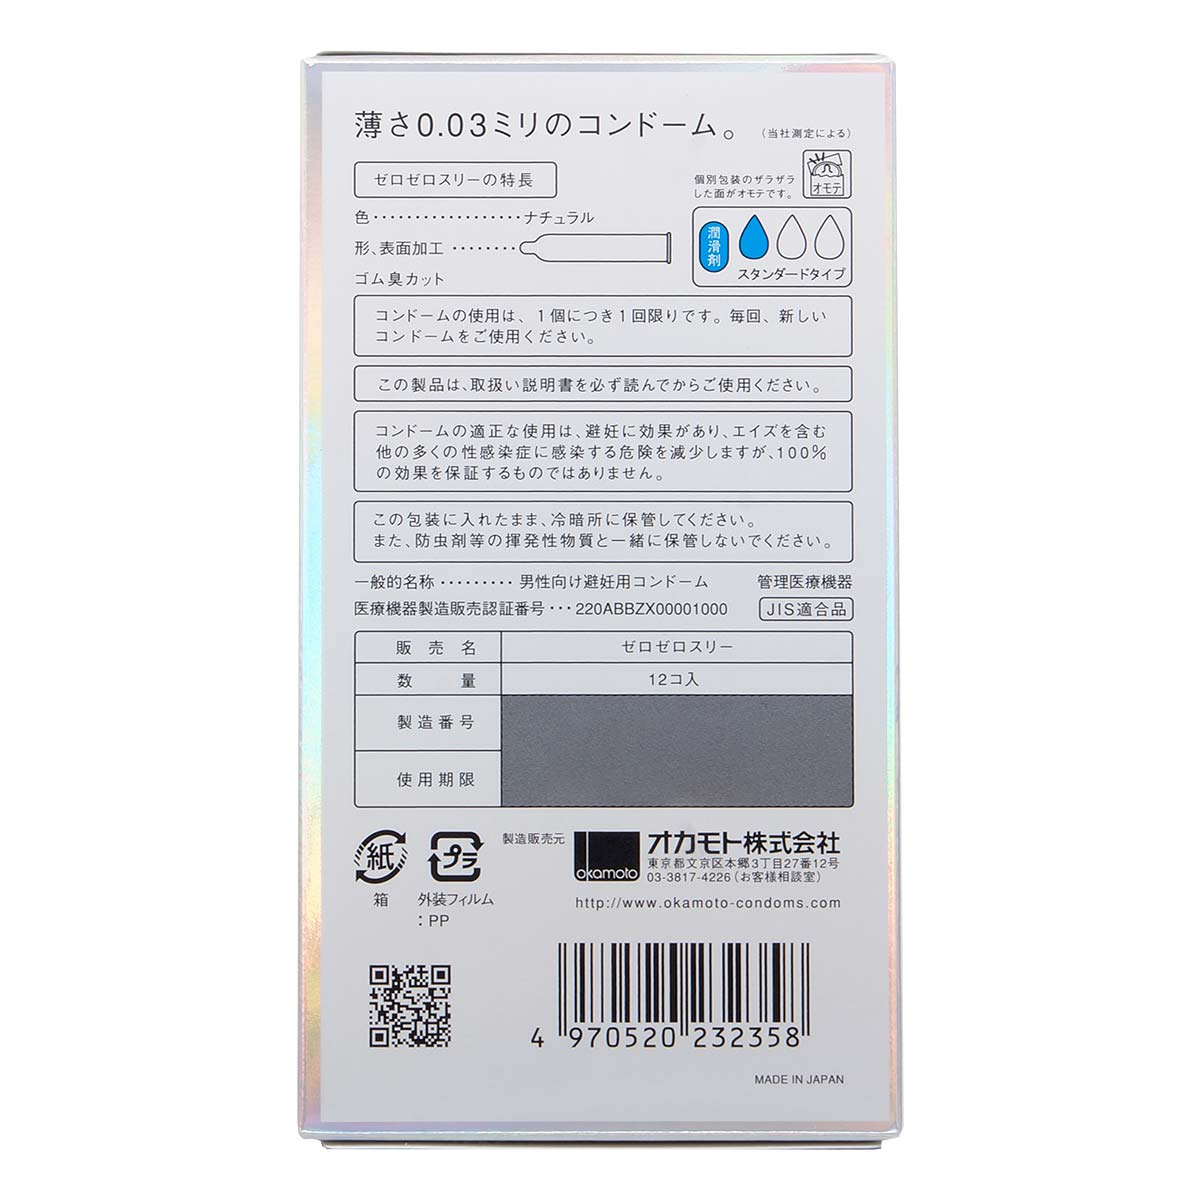 Zero Zero Three 0.03 (Japan Edition) 12's Pack Latex Condom-p_3